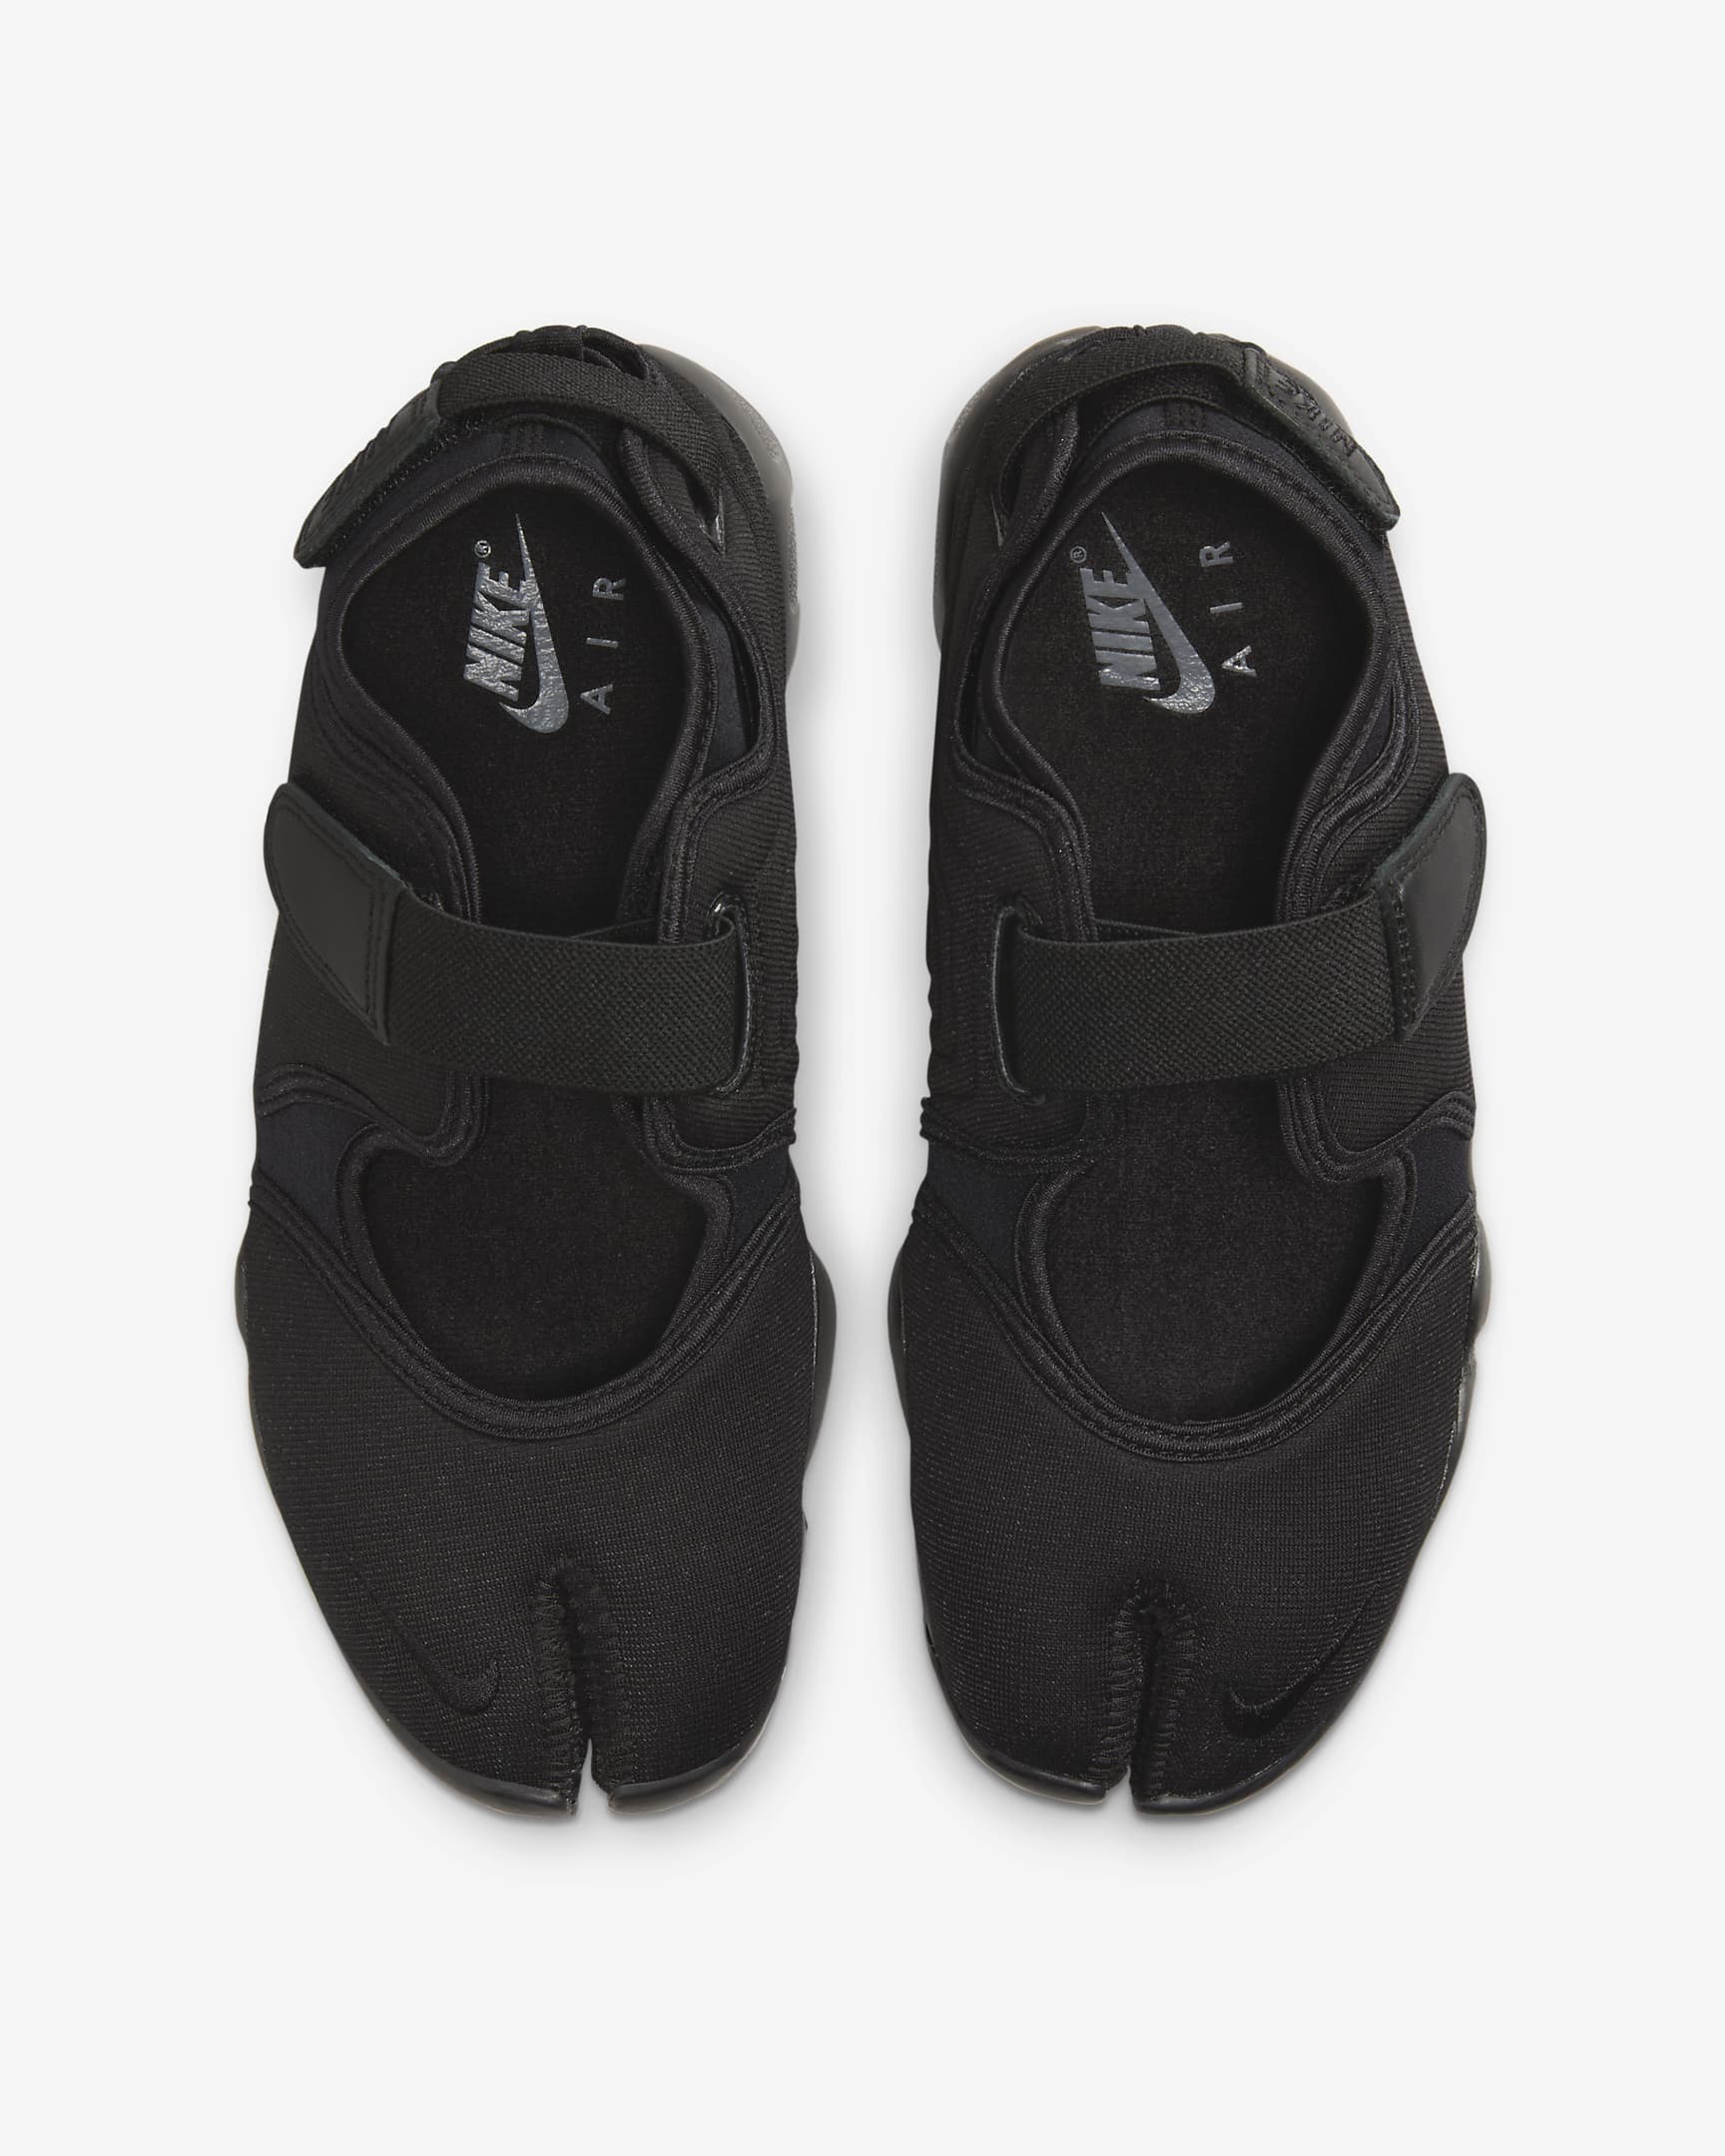 Nike Air Rift Women's Shoes - Black/Cool Grey